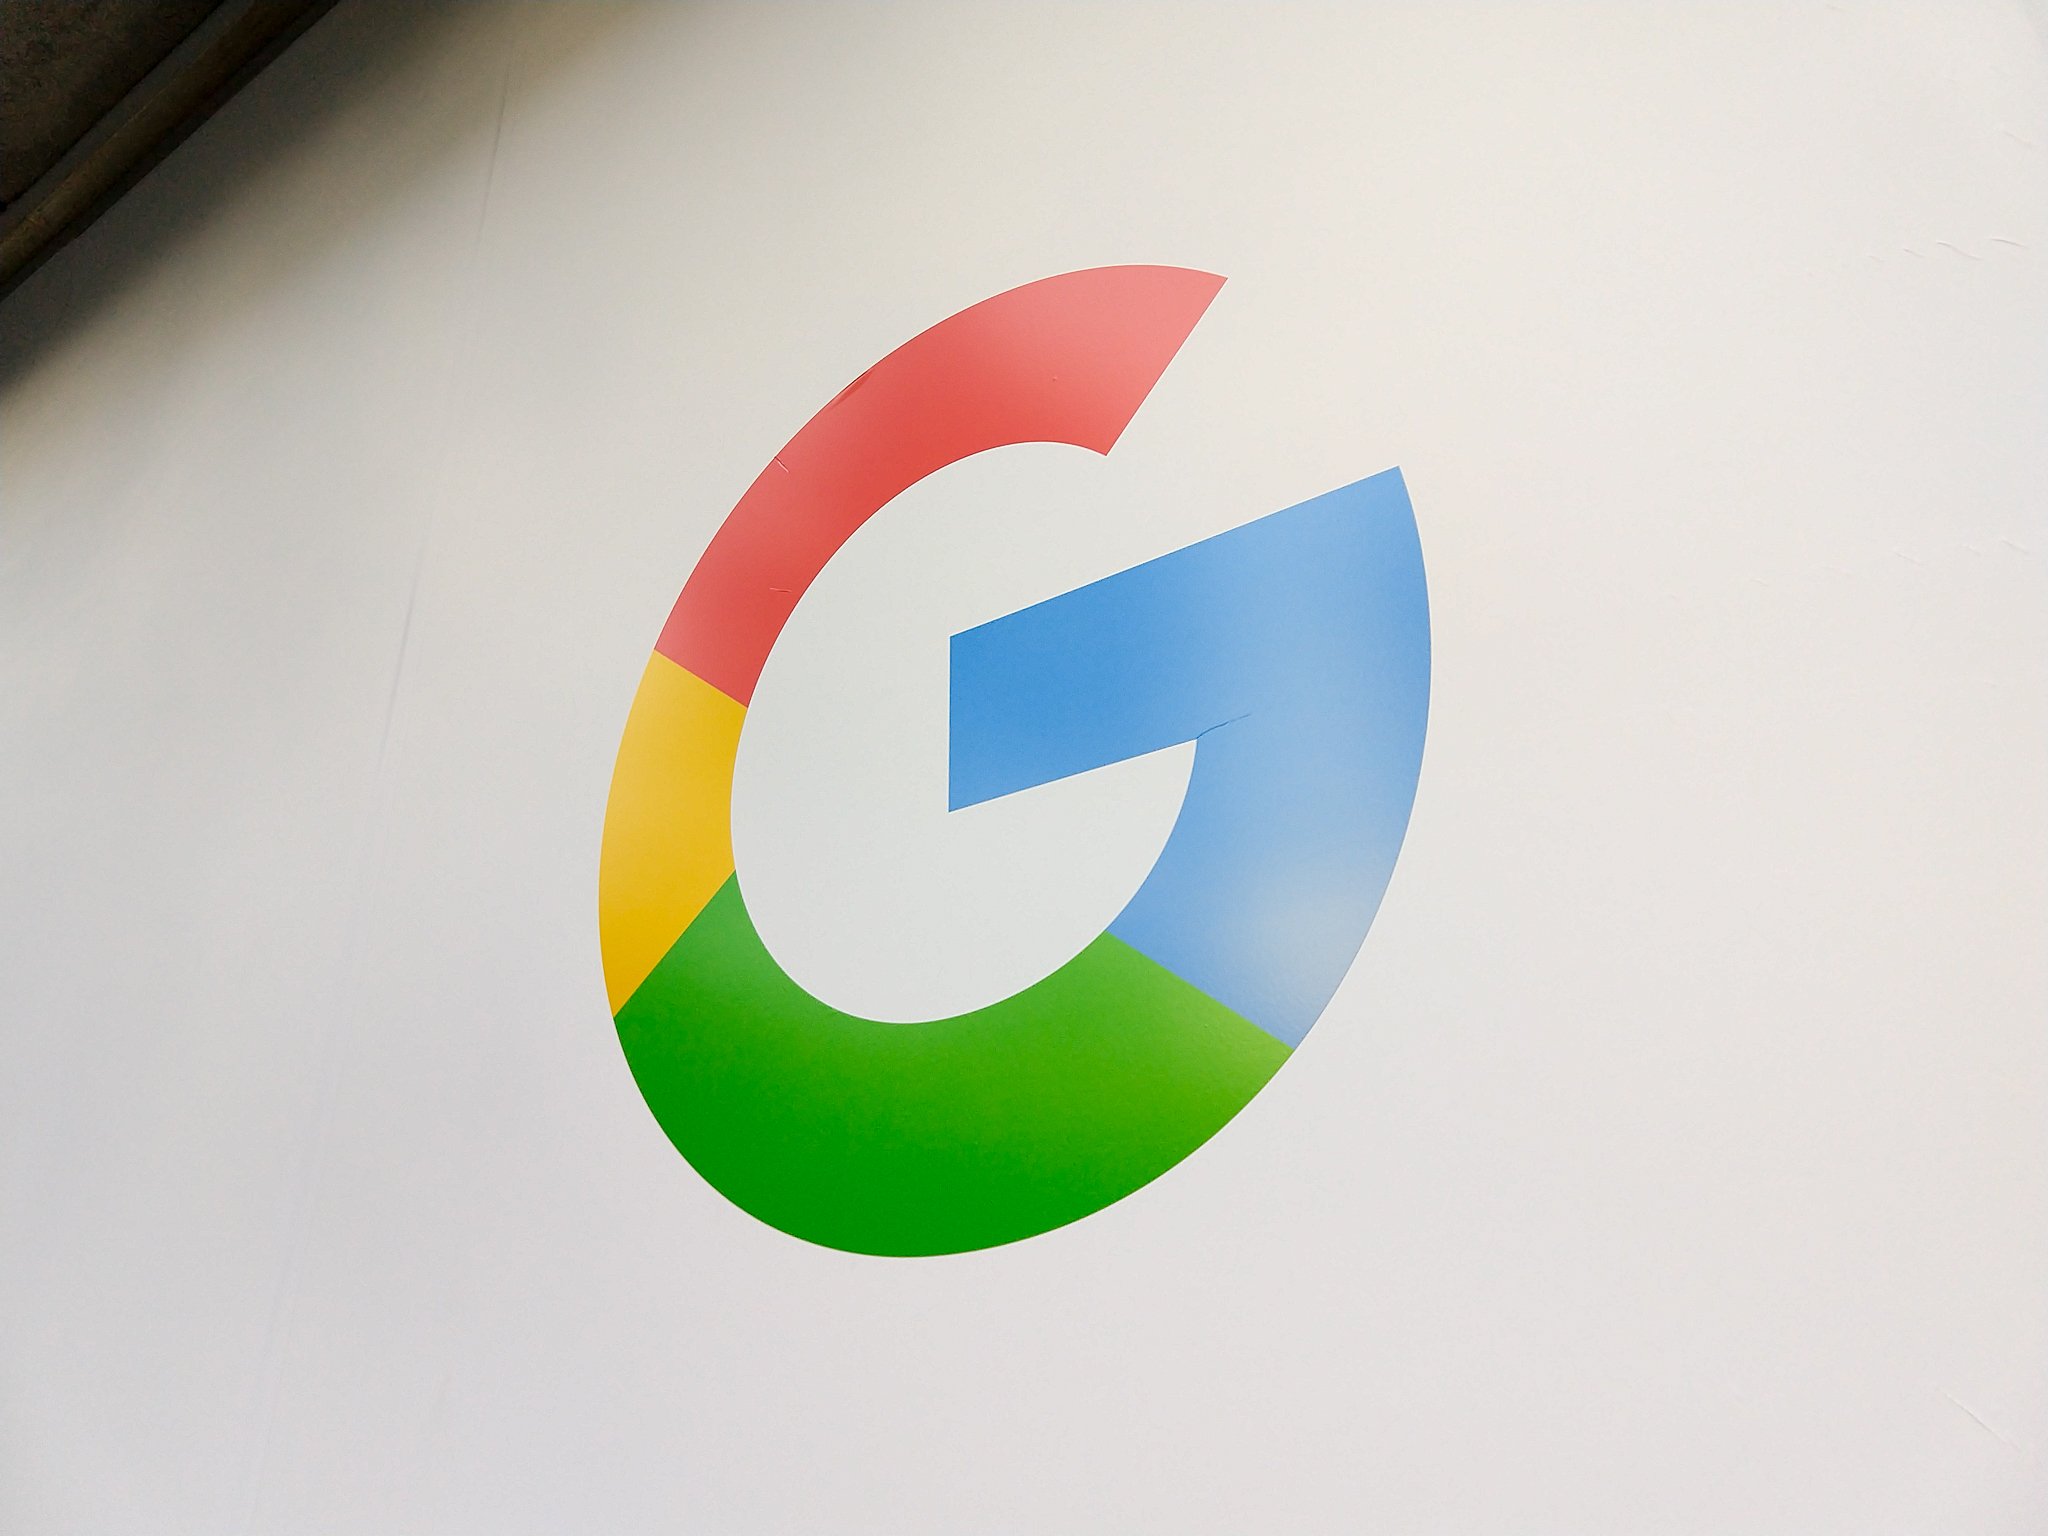 Google "G" logo